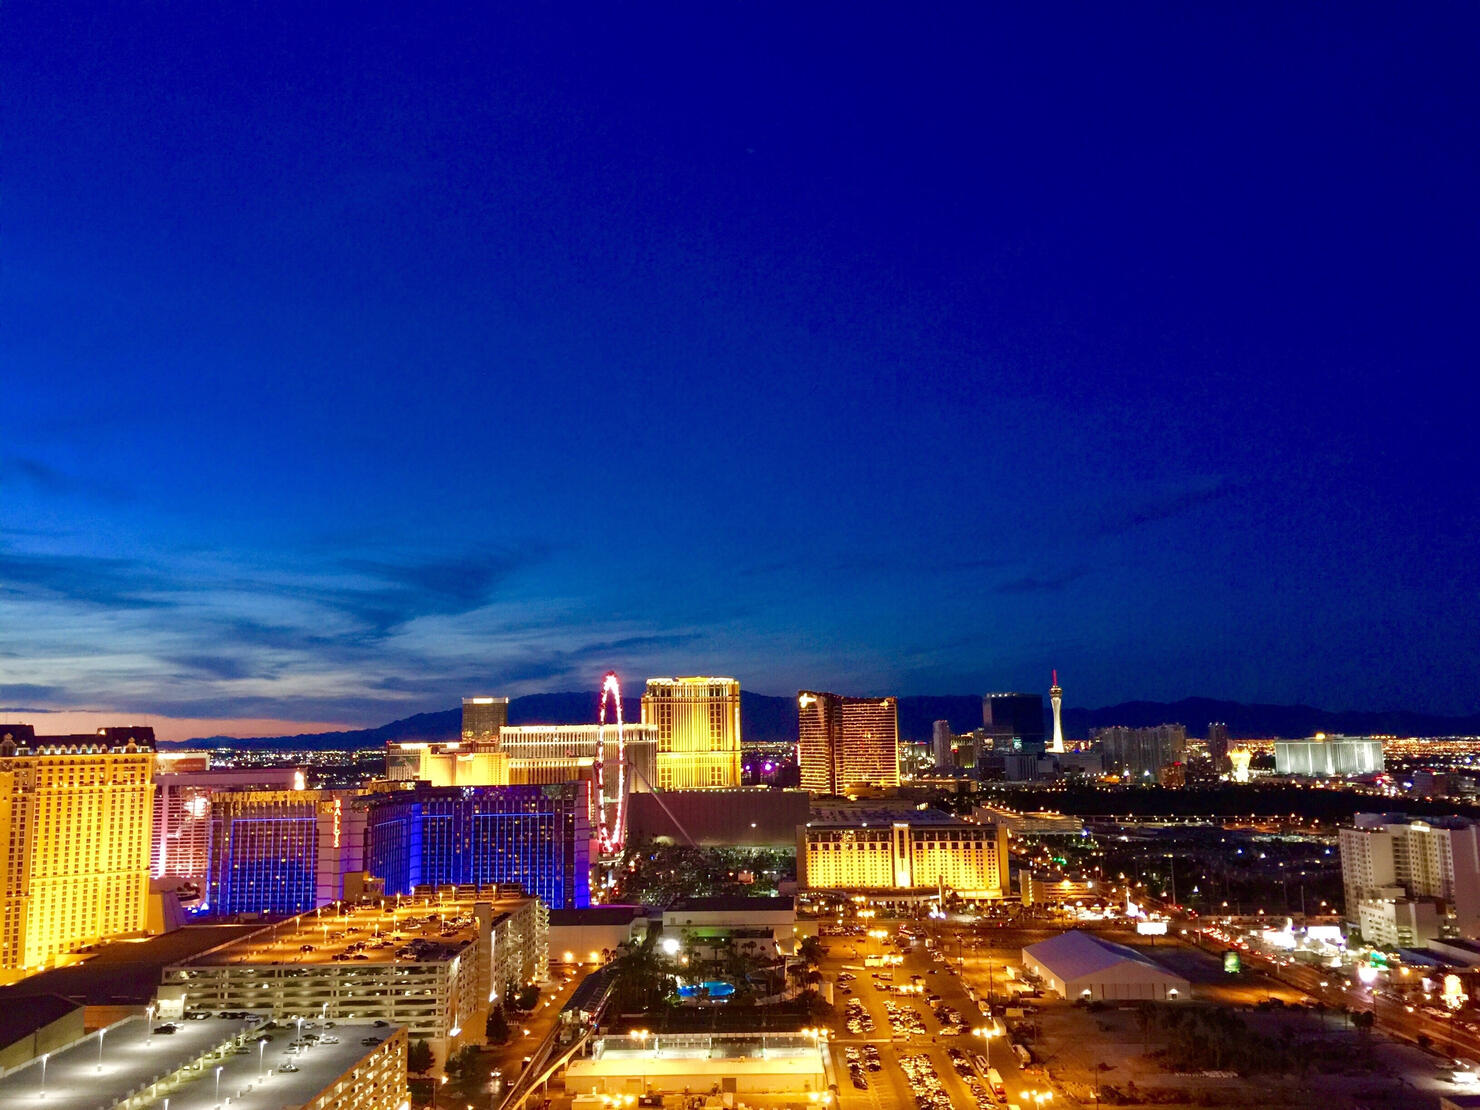 Hotel Buildings Lit Up At Night In Las Vegas Strip Nevada